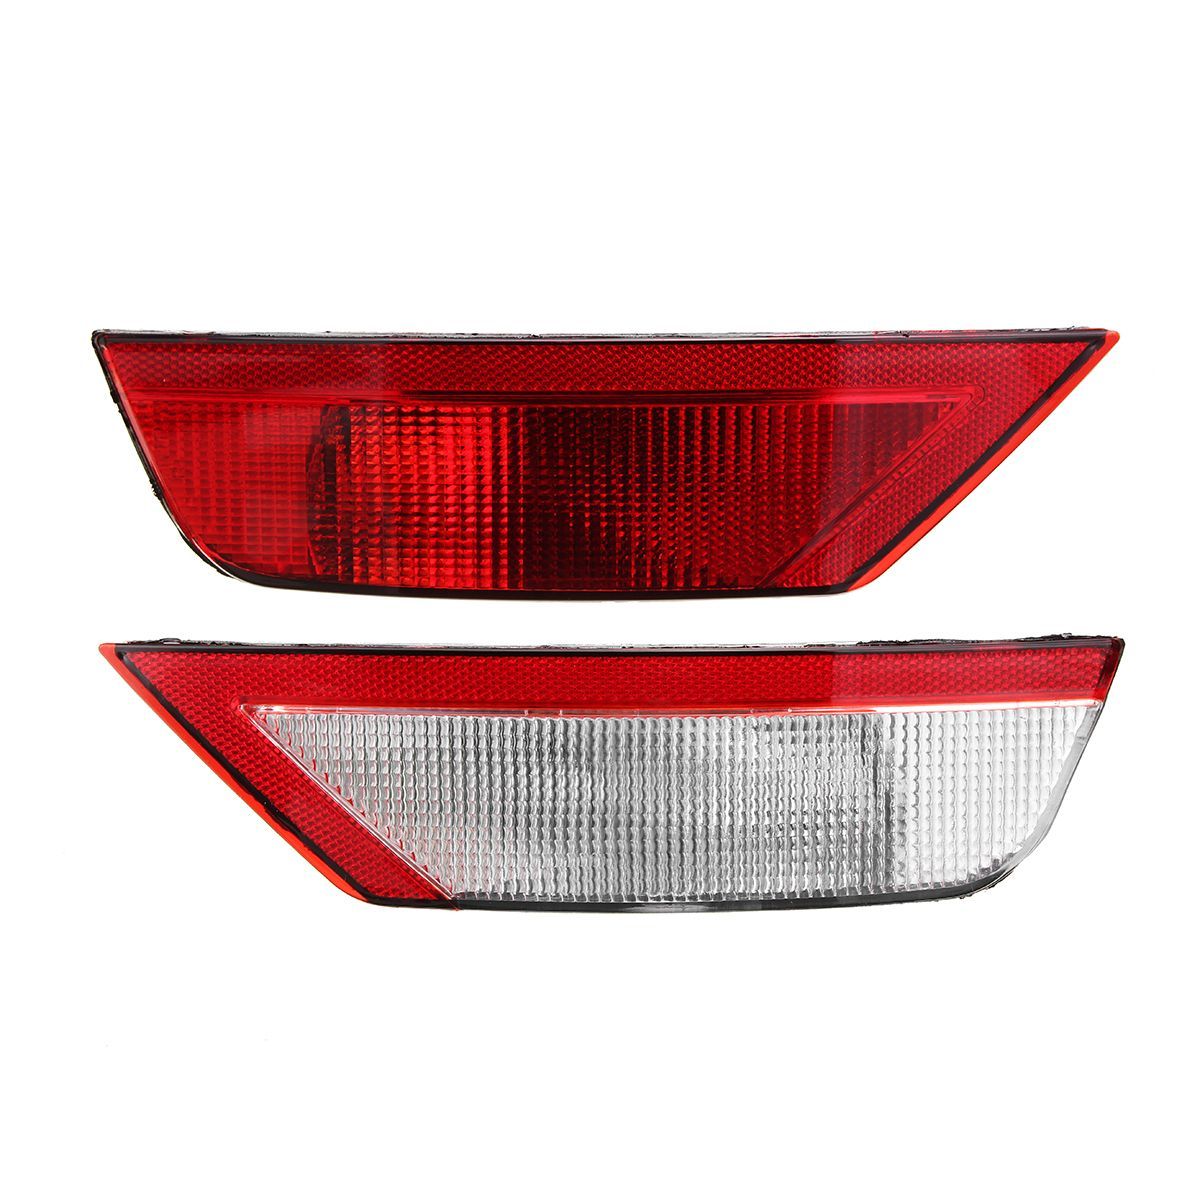 LeftRight-Side-Rear-Tail-Fog-Light-Bumper-Reflector-for-Ford-Focus-2008-2012-1359004